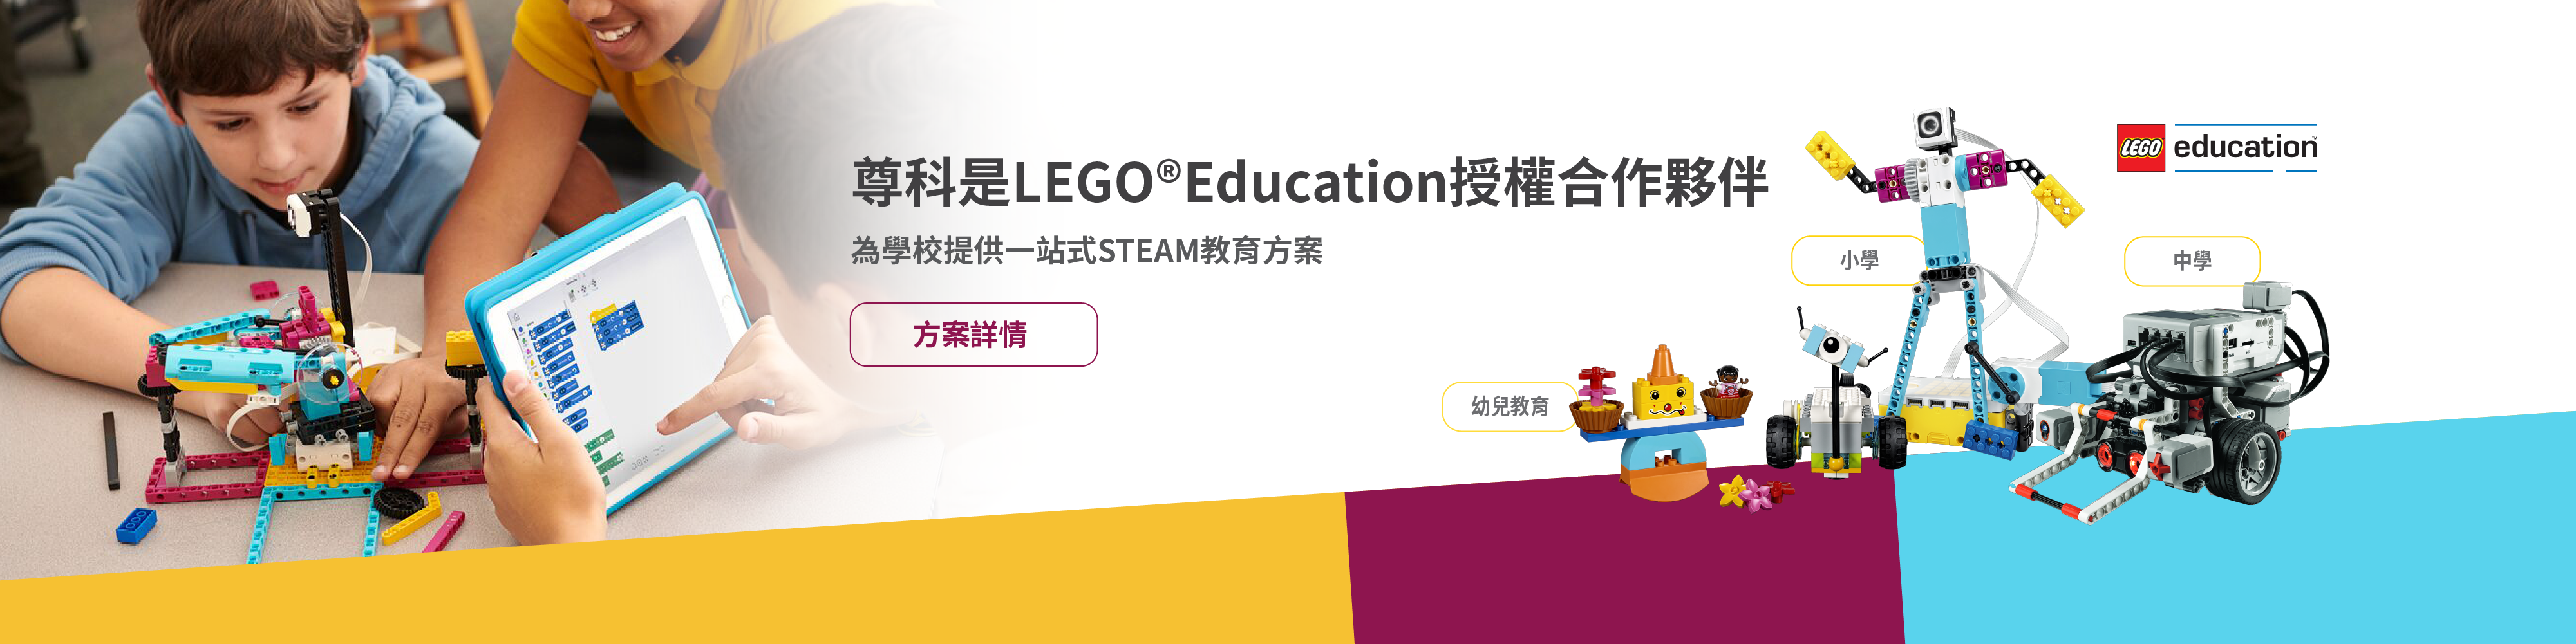 尊科是 LEGO® Education 香港授權合作夥伴